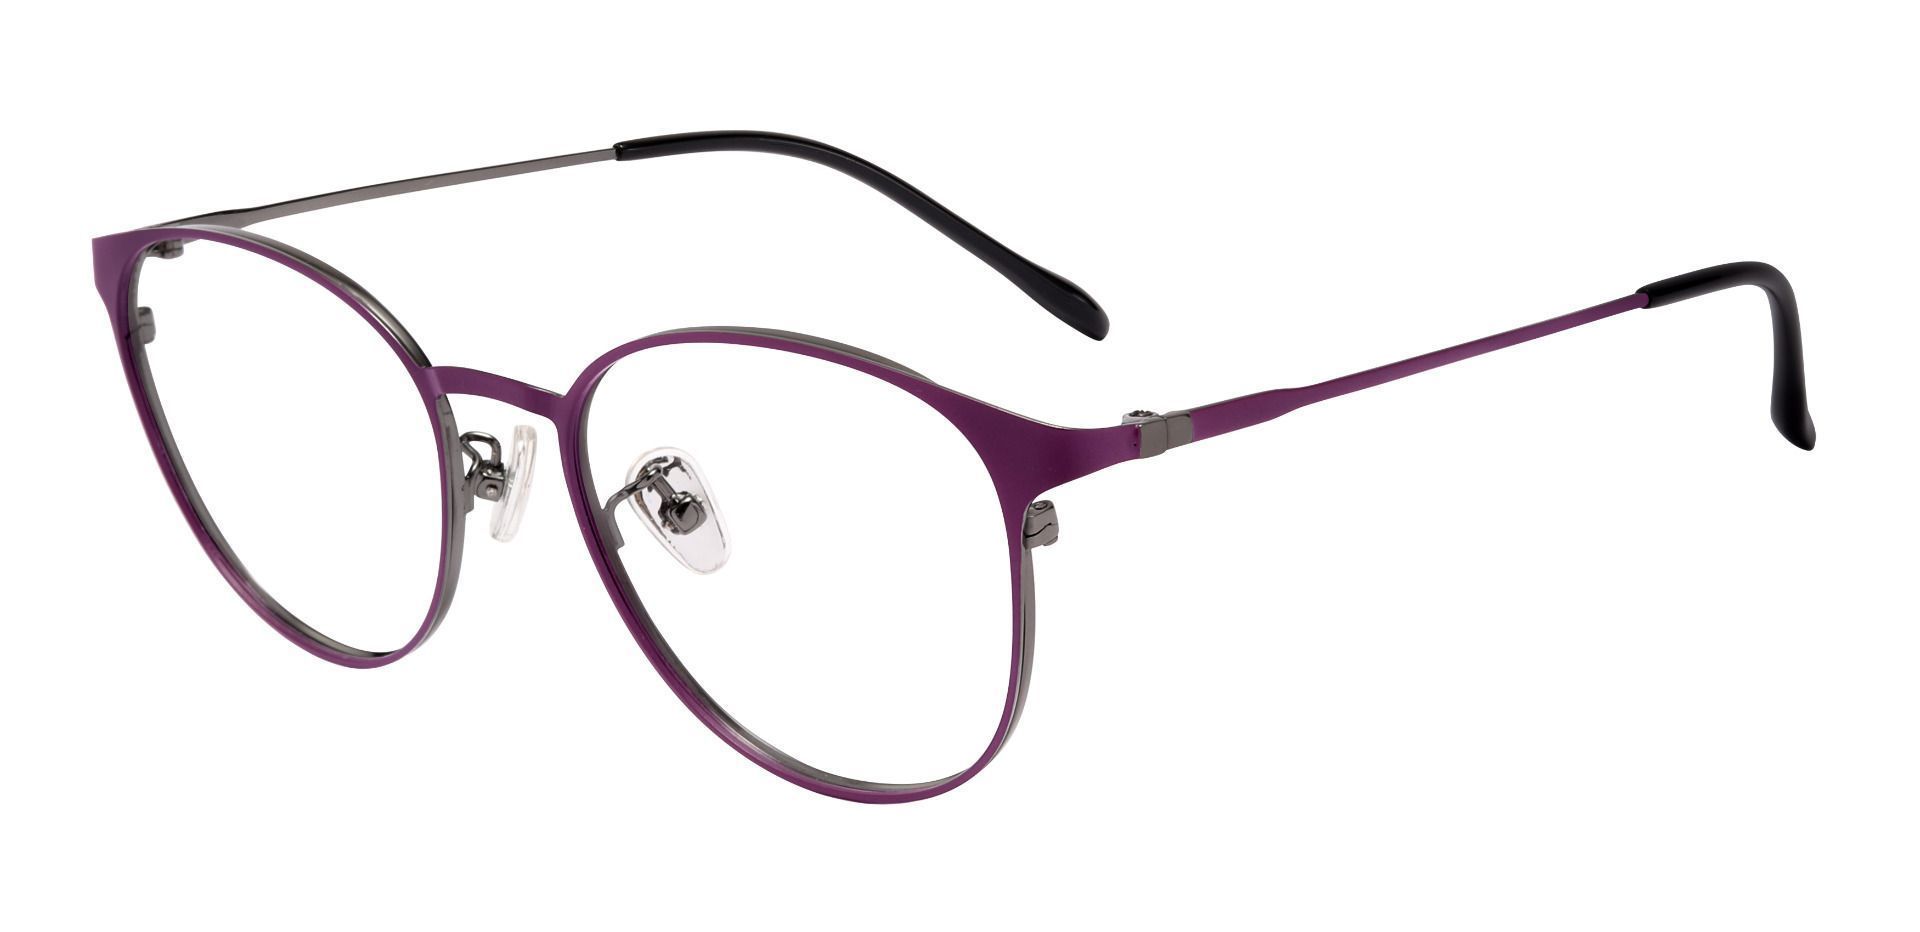 Bertie Oval Reading Glasses - Purple